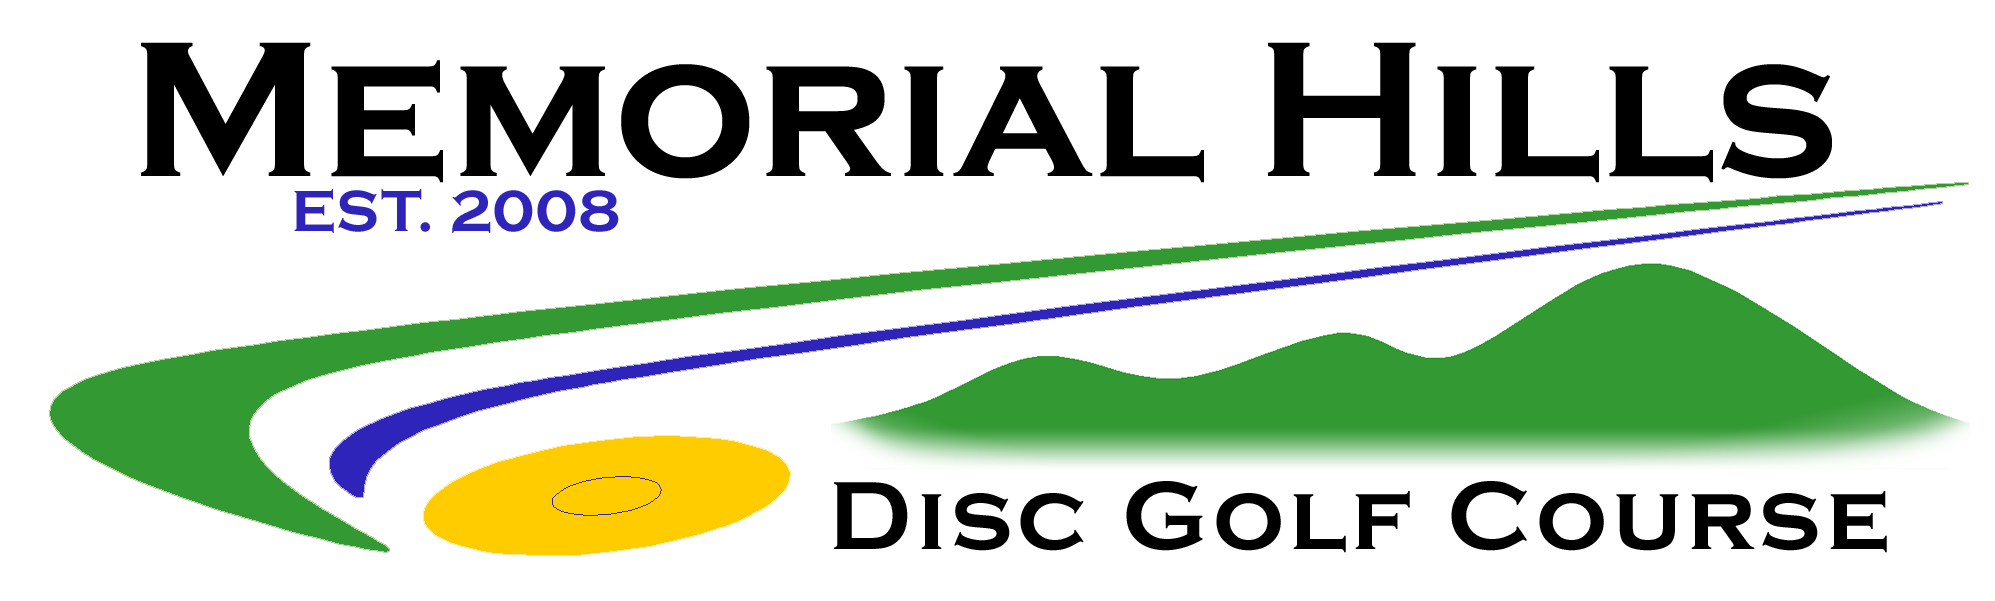 Disc golf logo